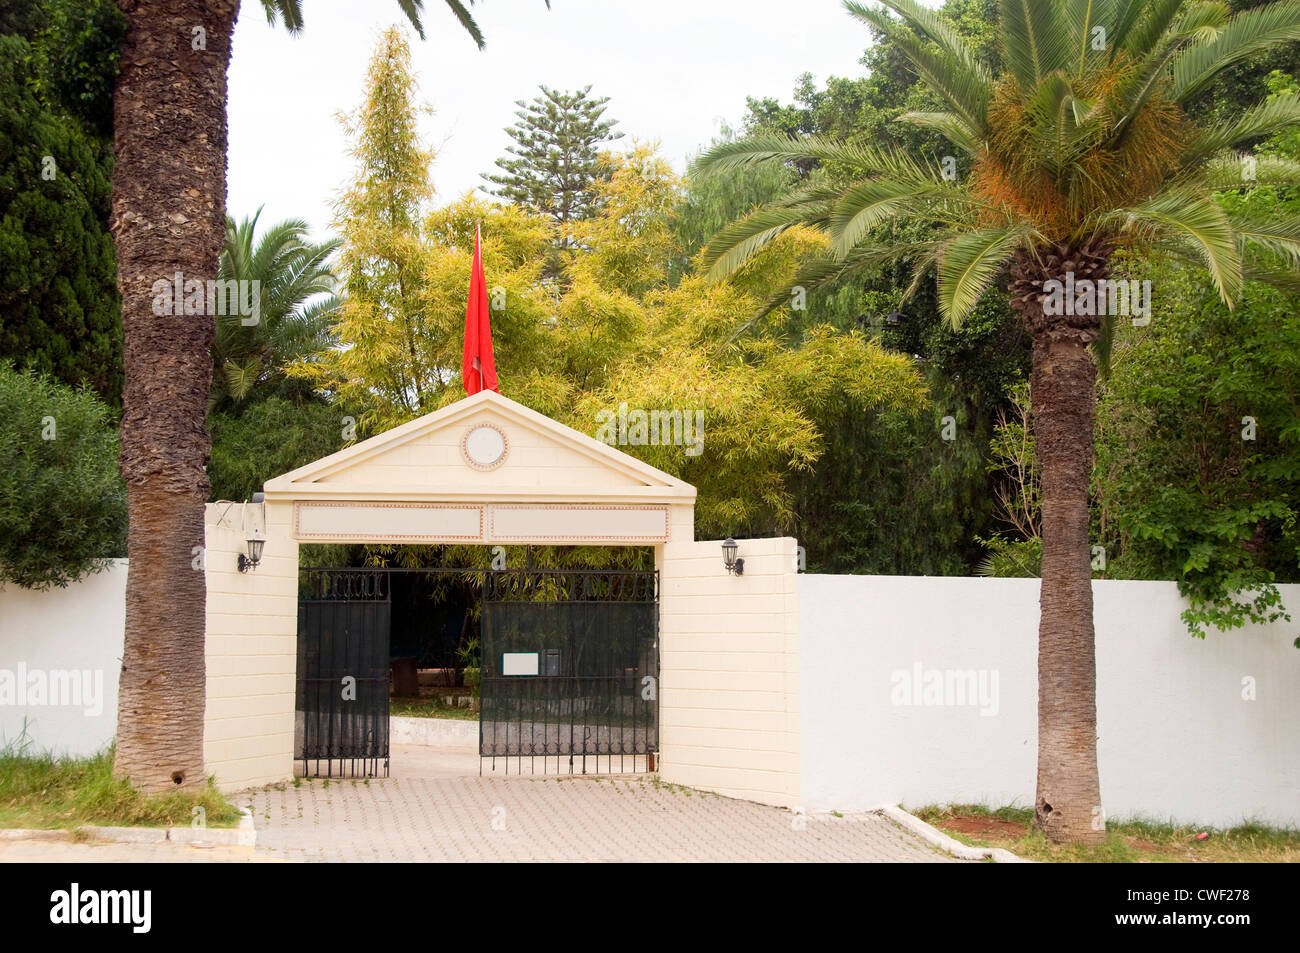 entry private tennis club of Carthage Tunisia Stock Photo - Alamy